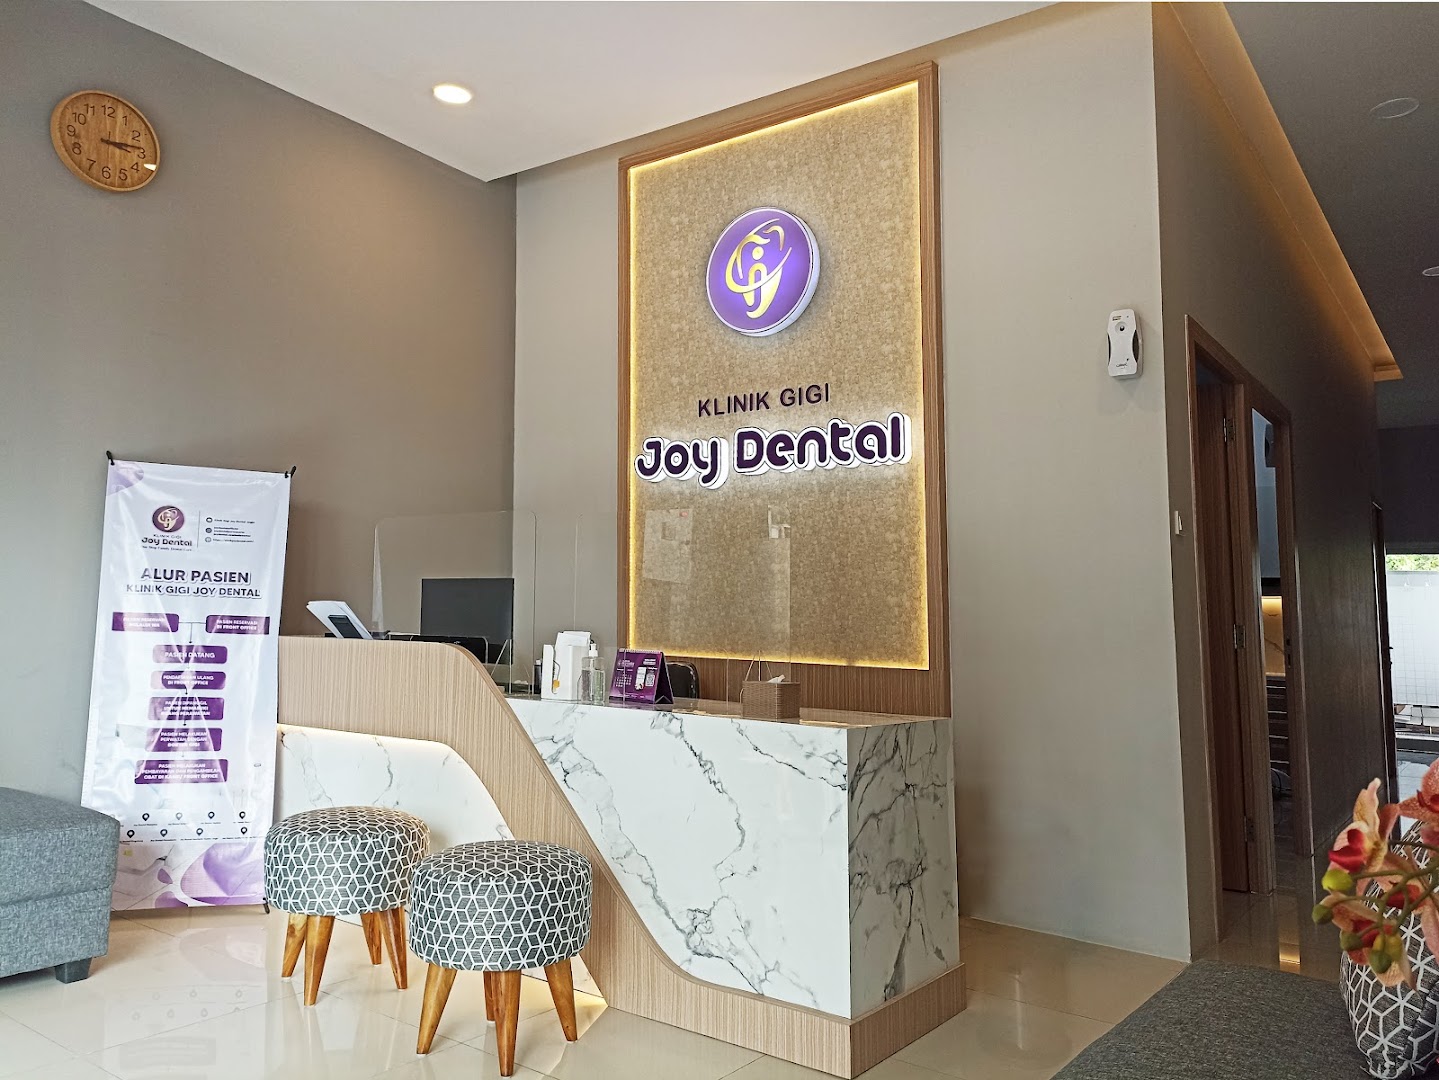 Gambar Klinik Gigi Joy Dental Semarang